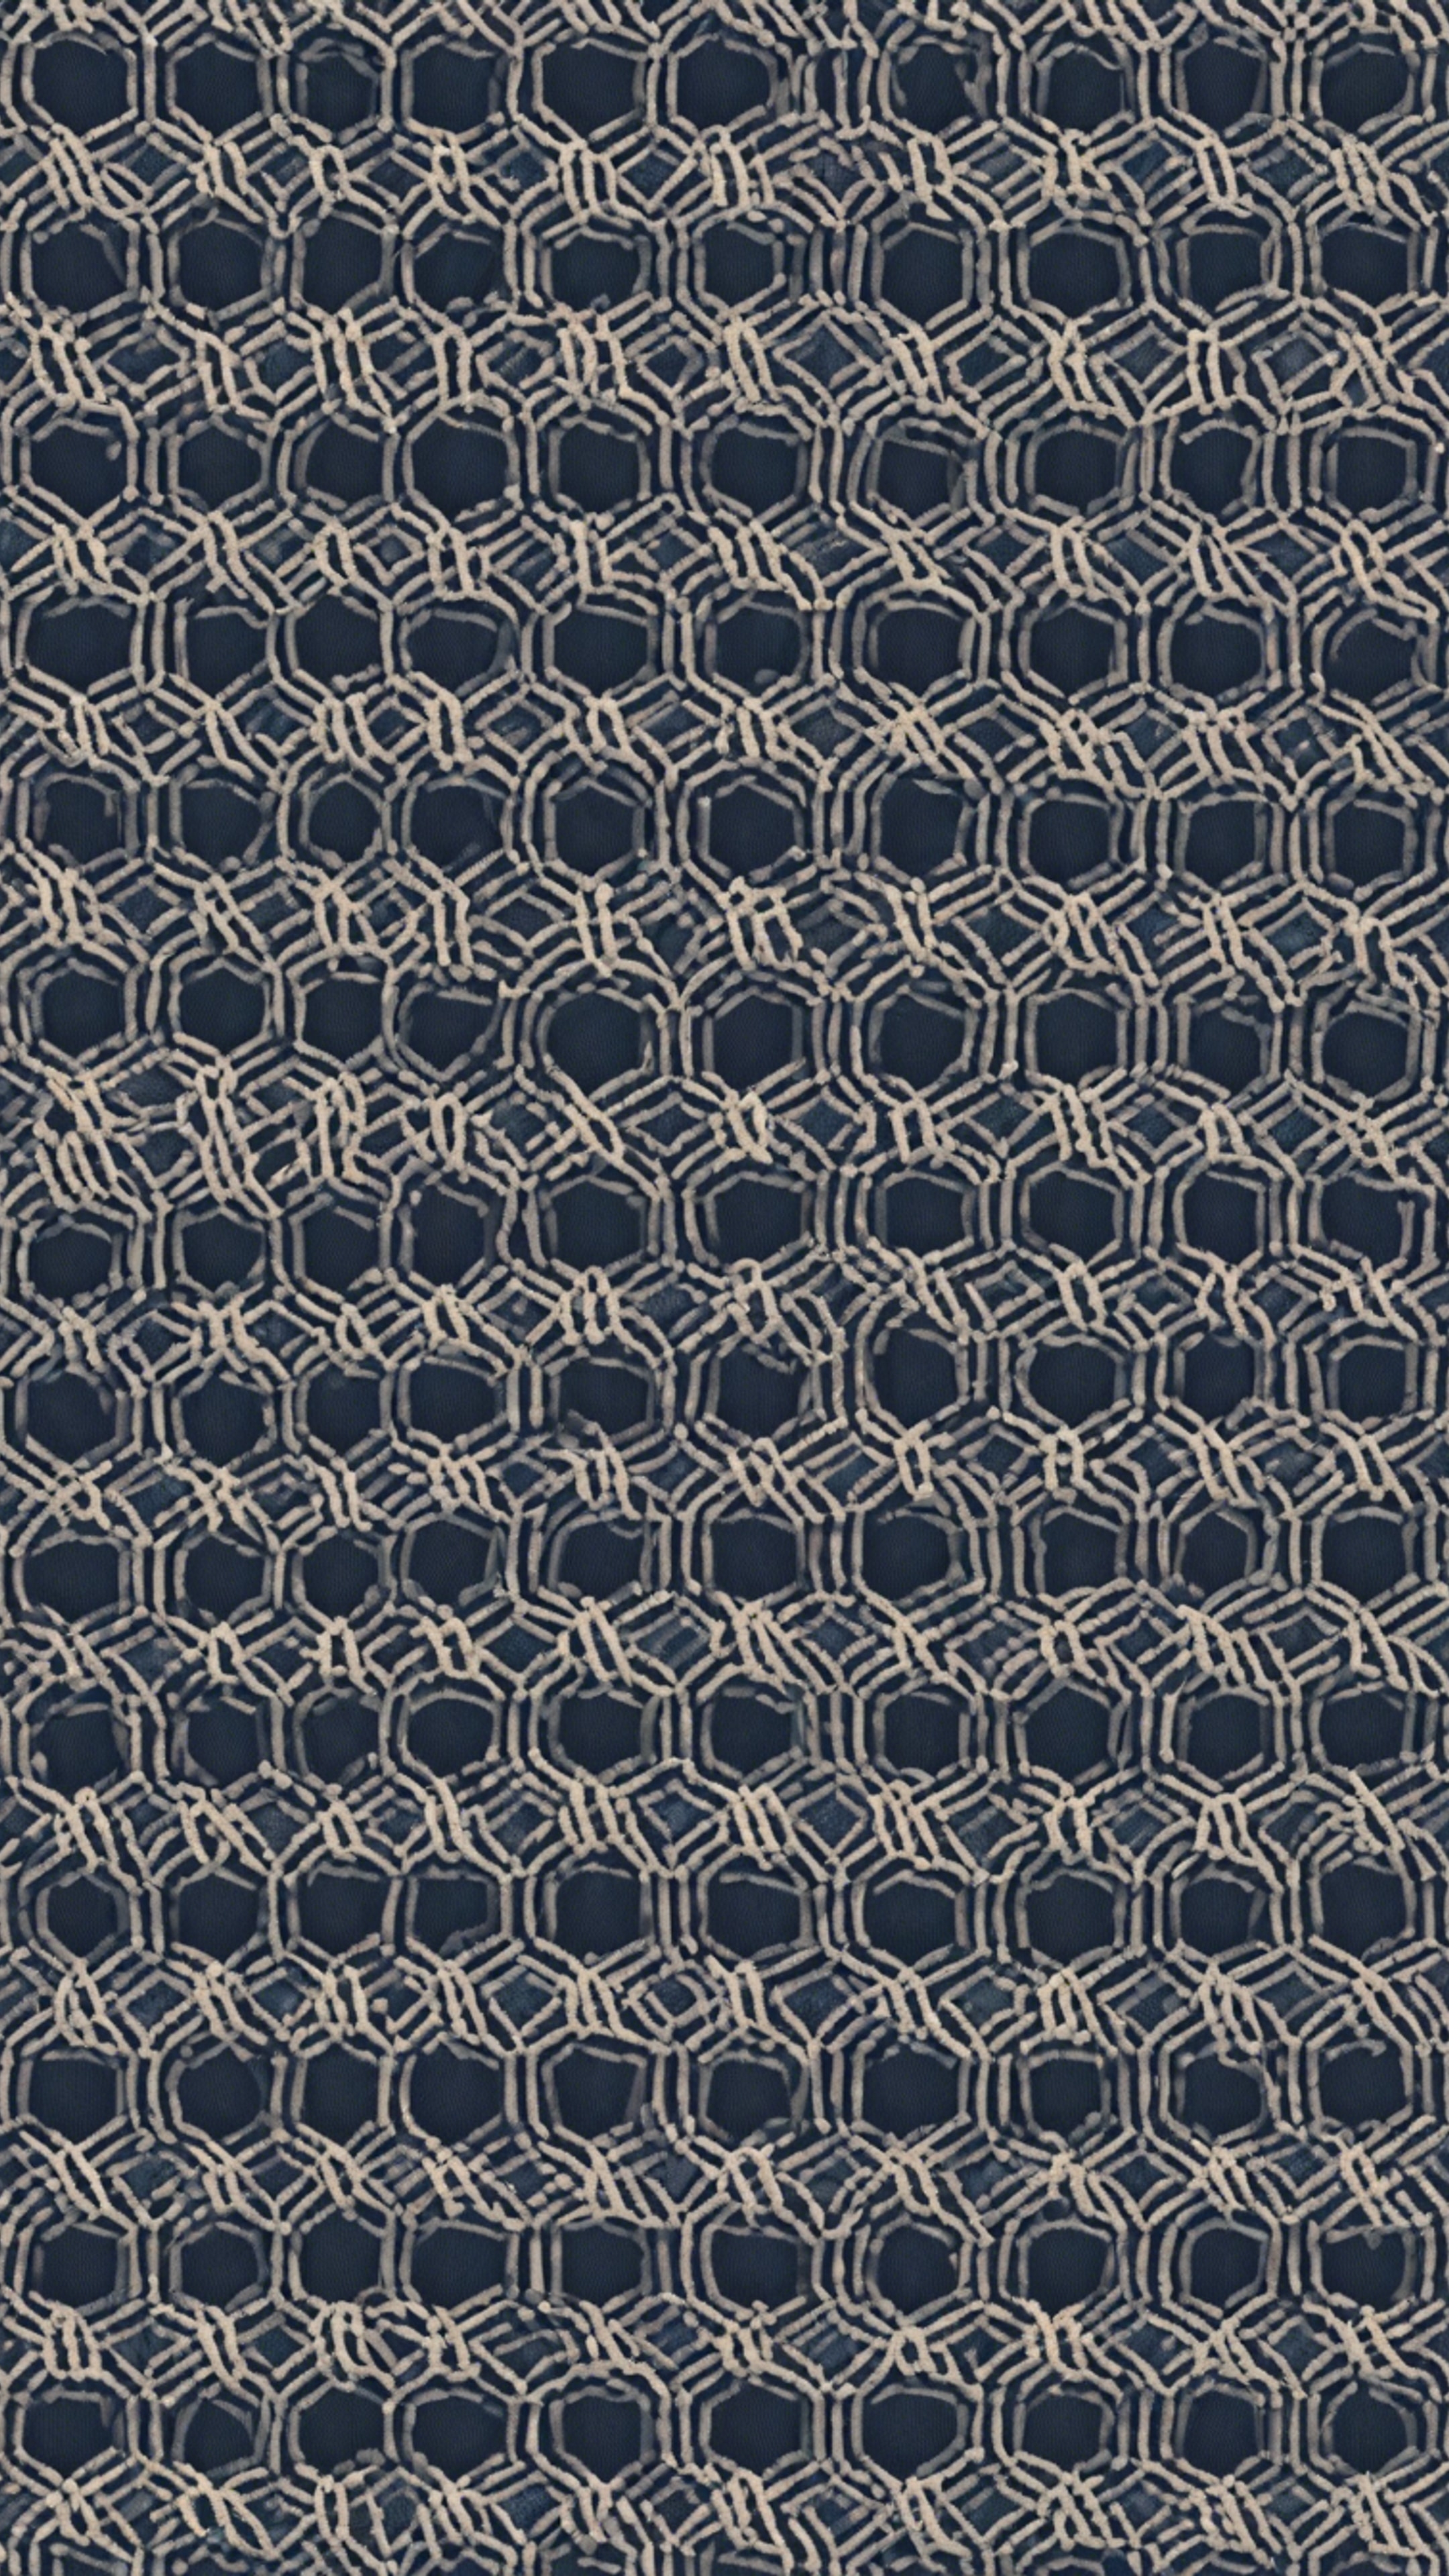 A geometric seamless pattern inspired by traditional Japanese sashiko stitching Fondo de pantalla[d49f05622a7b4579b9ed]